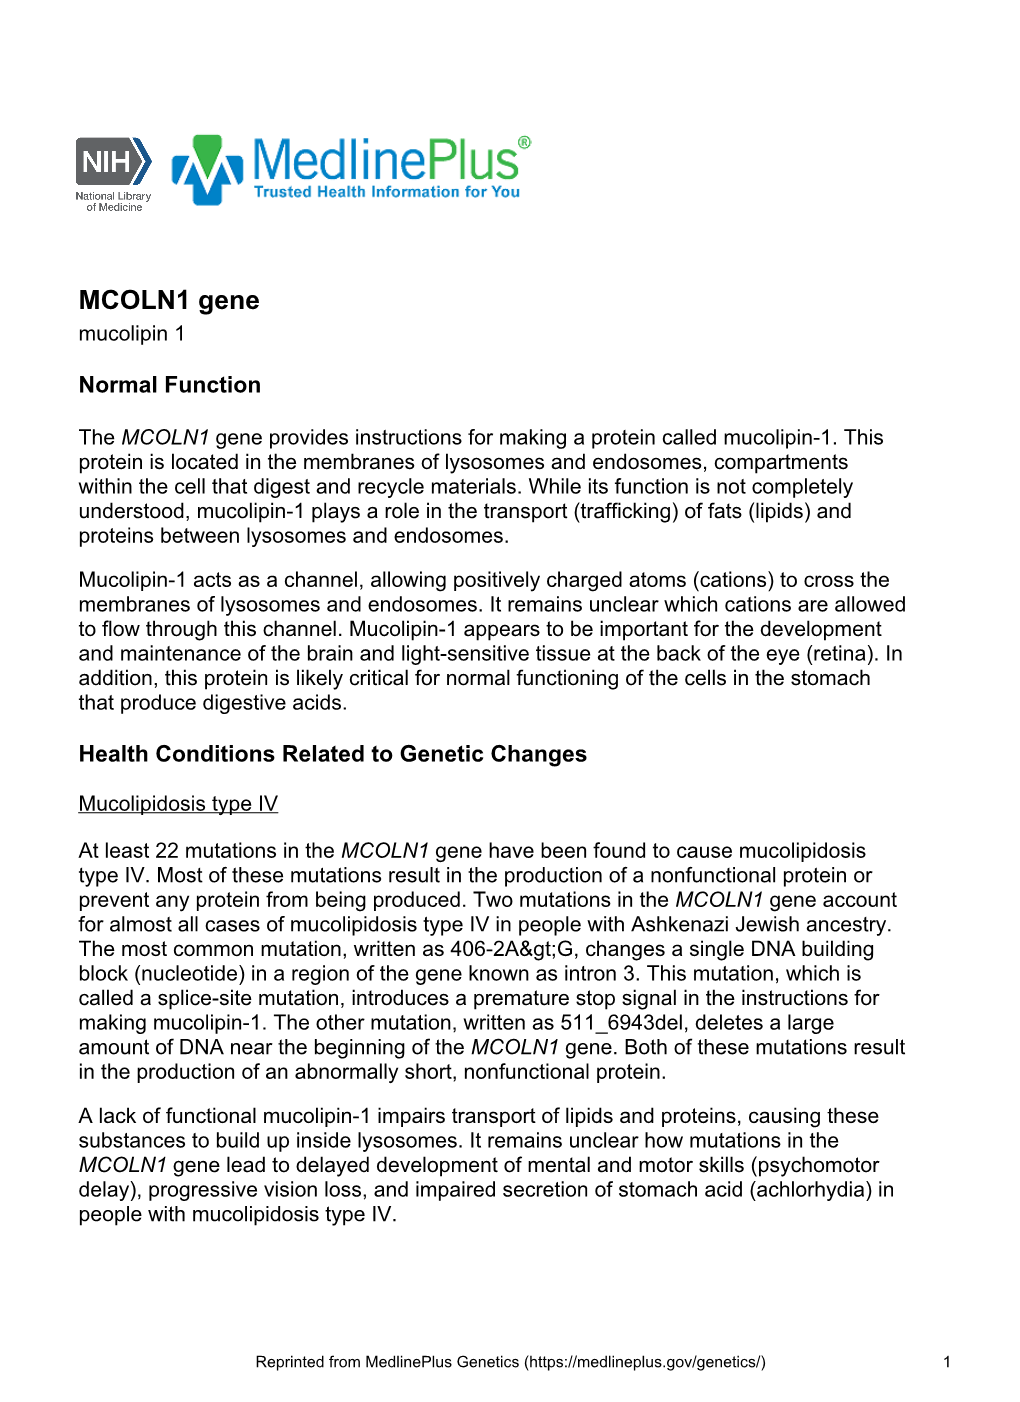 MCOLN1 Gene Mucolipin 1